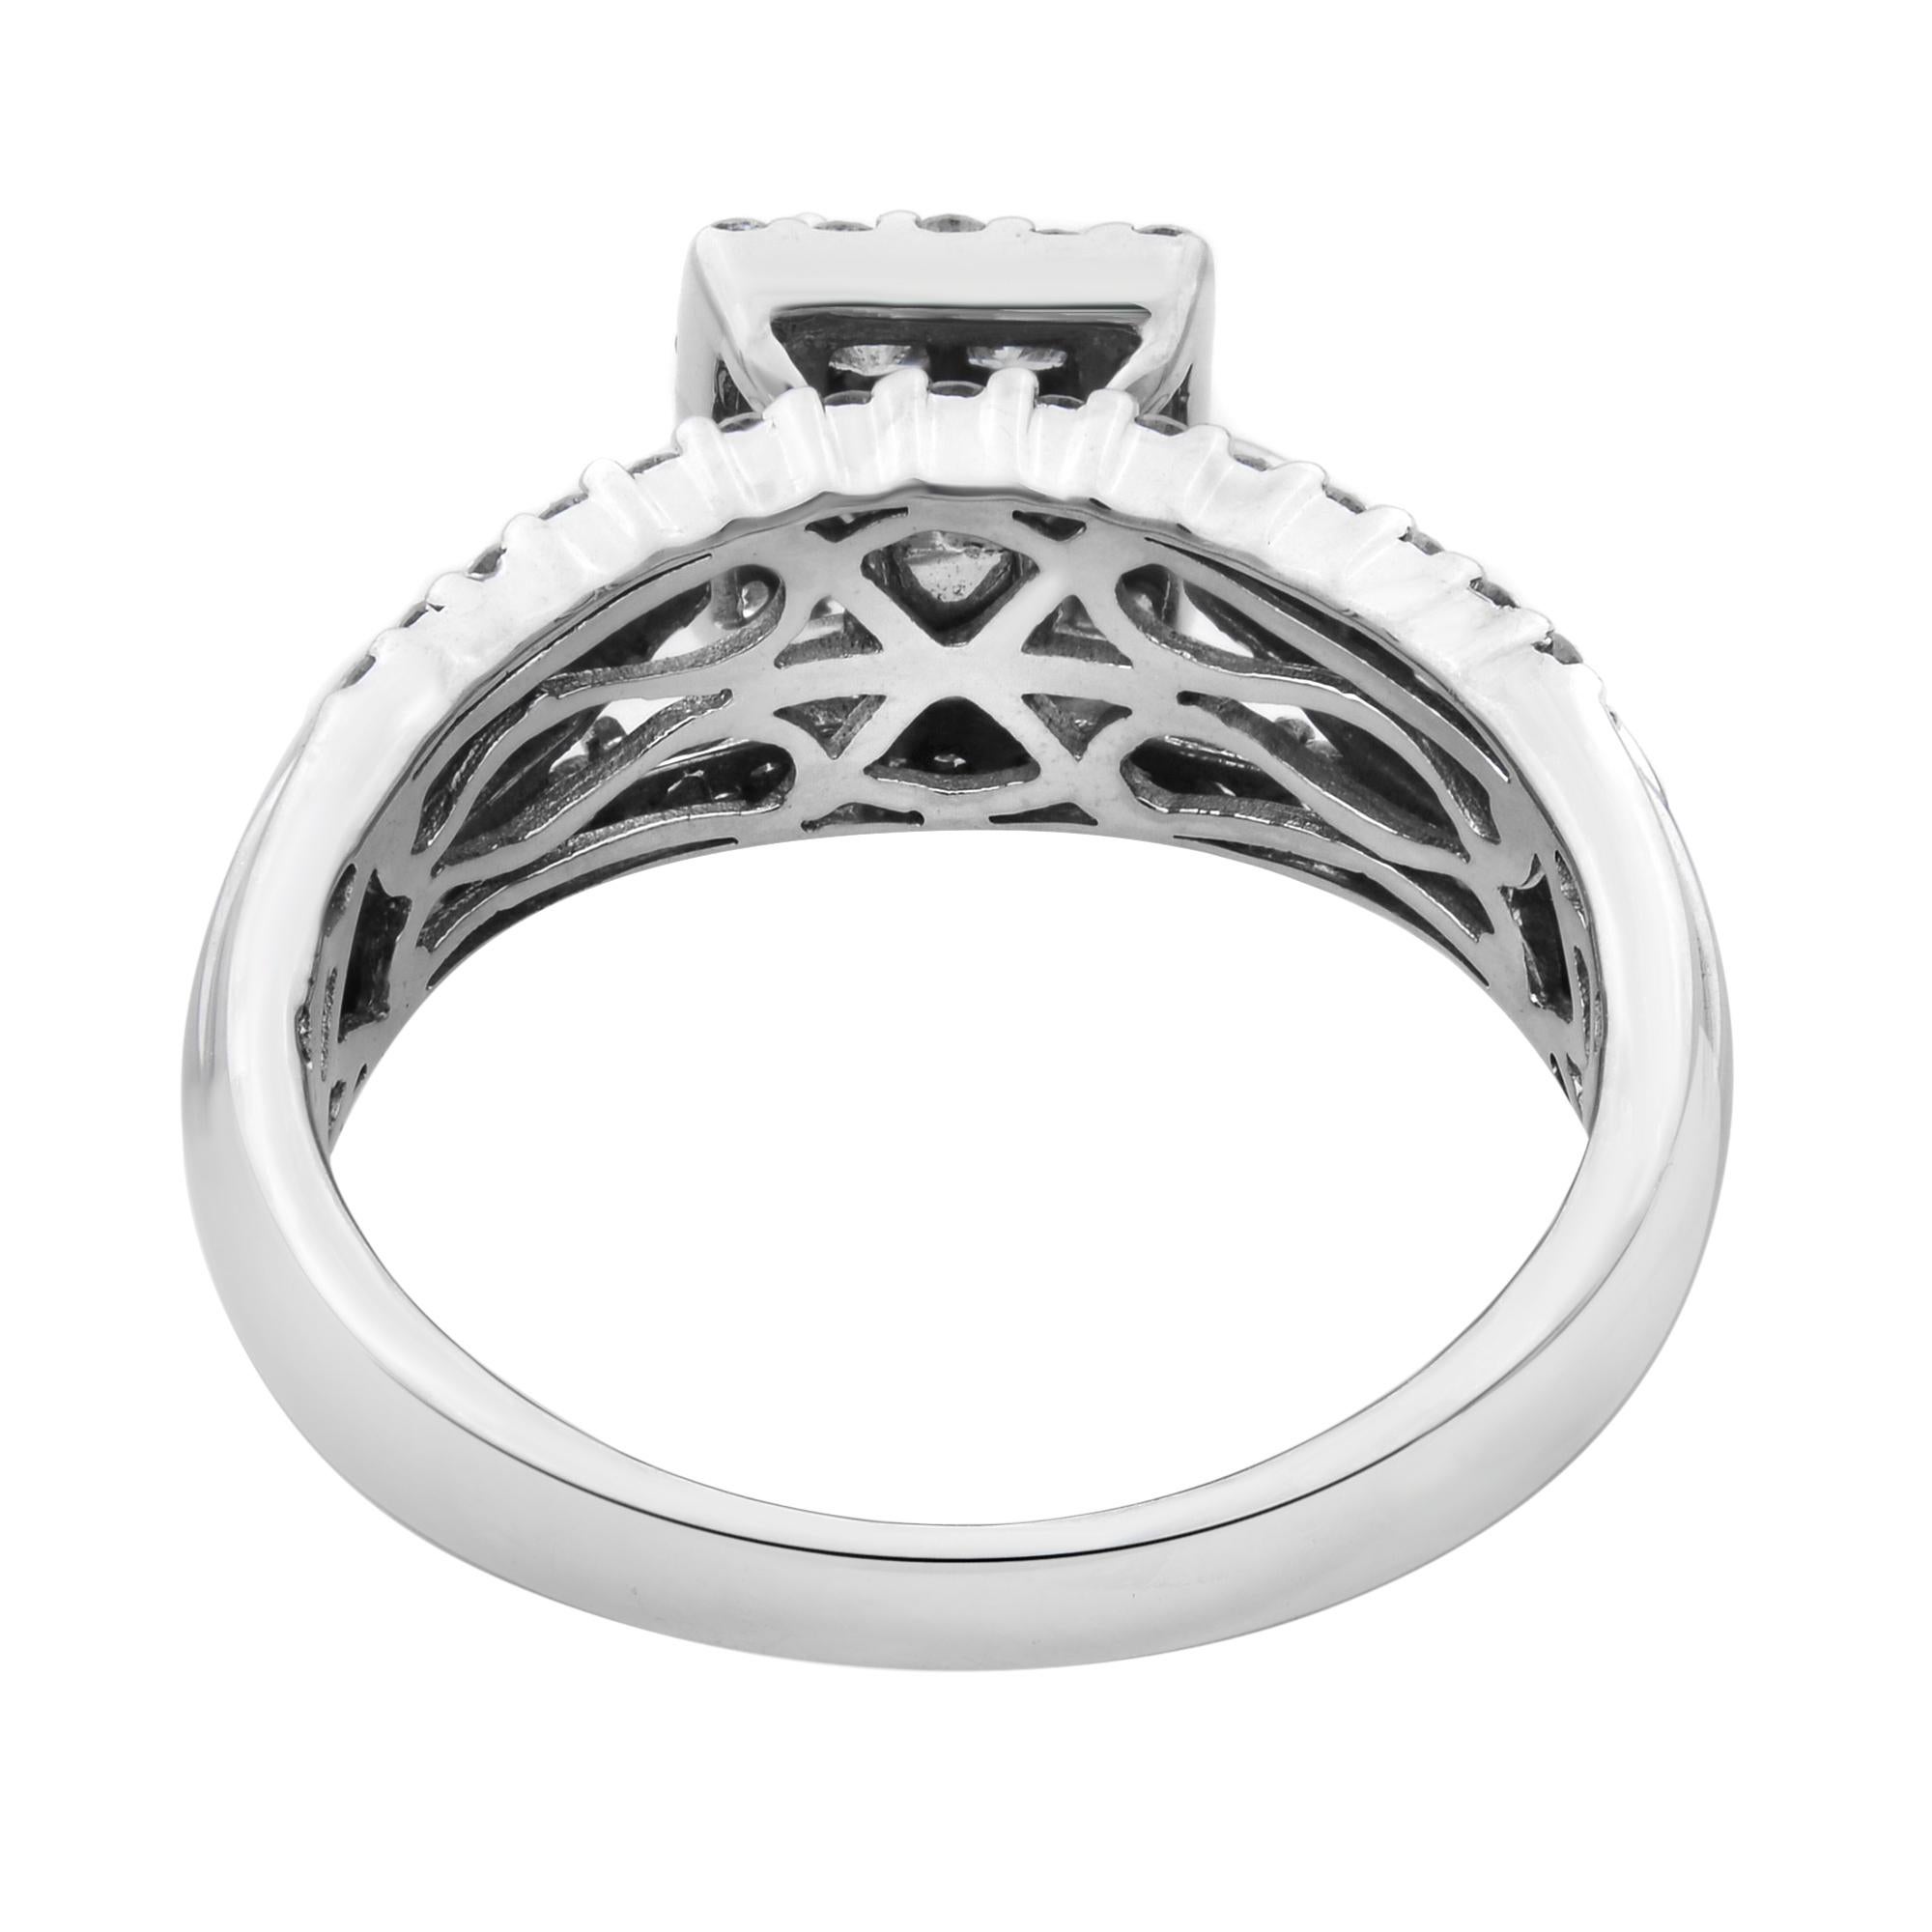 Rachel Koen Diamond Ladies Wedding Ring 14K White Gold 1.25cttw In New Condition For Sale In New York, NY